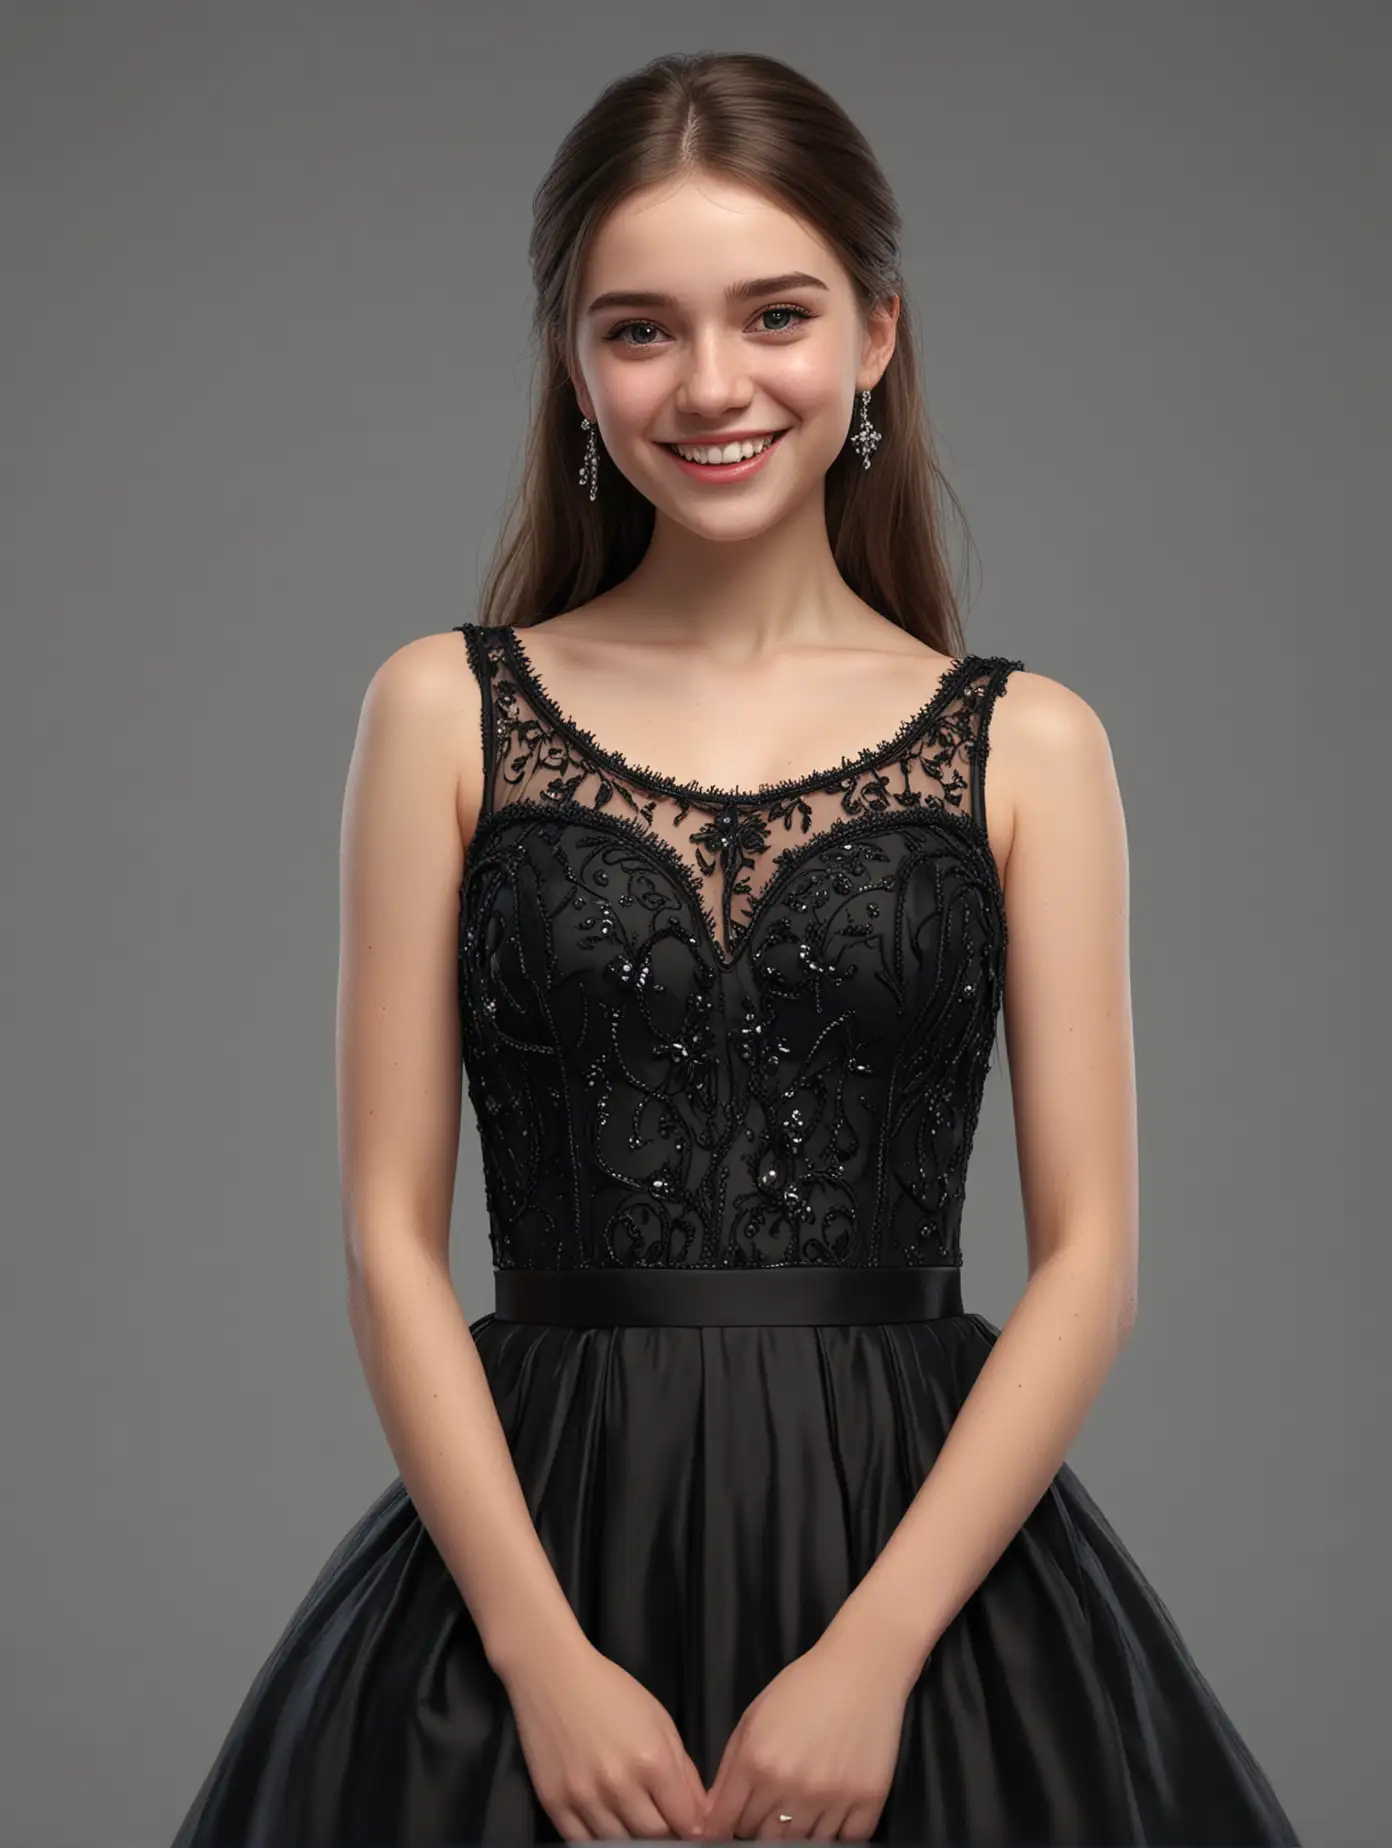 Happy Girl in Elegant Black Evening Dress Portrait